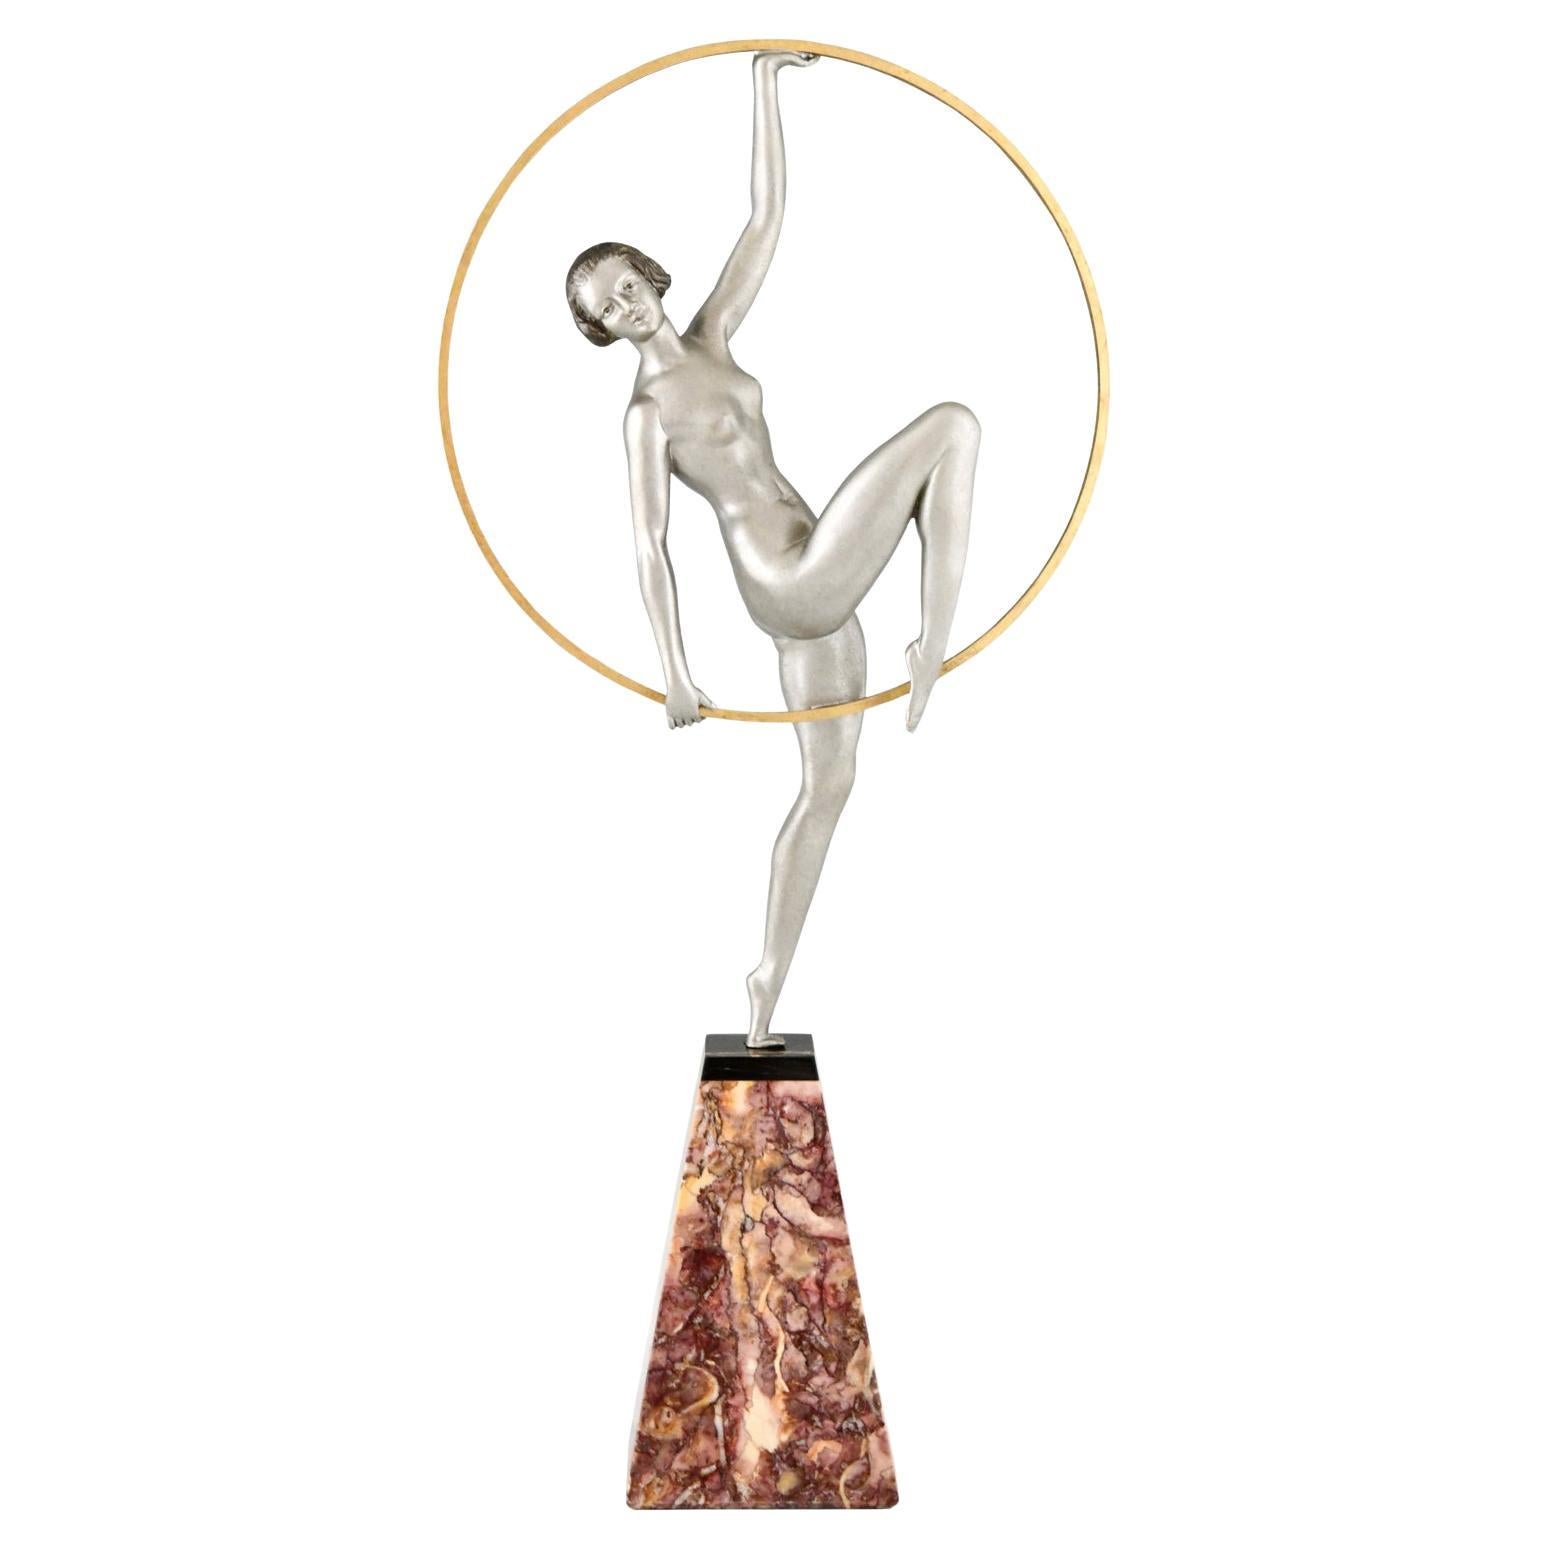 Art Deco sculpture hoop dancer by Limousin France 1930